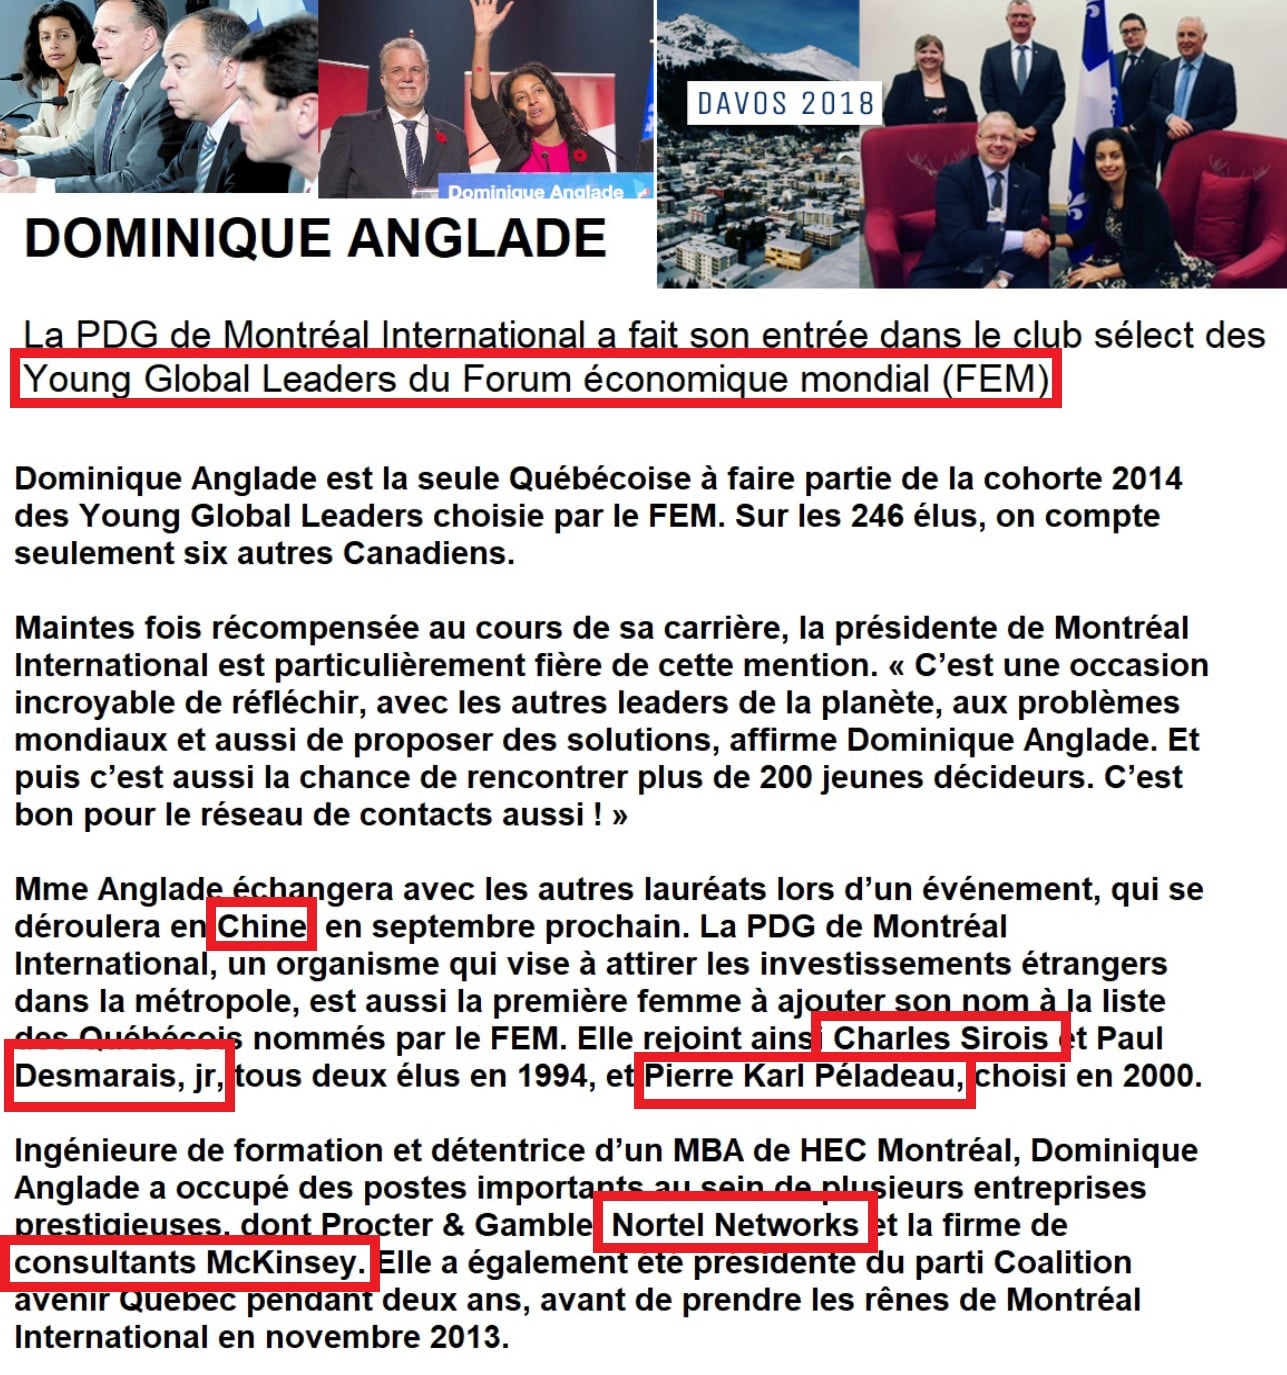 dominique-anglade-et-davos-2018.jpg